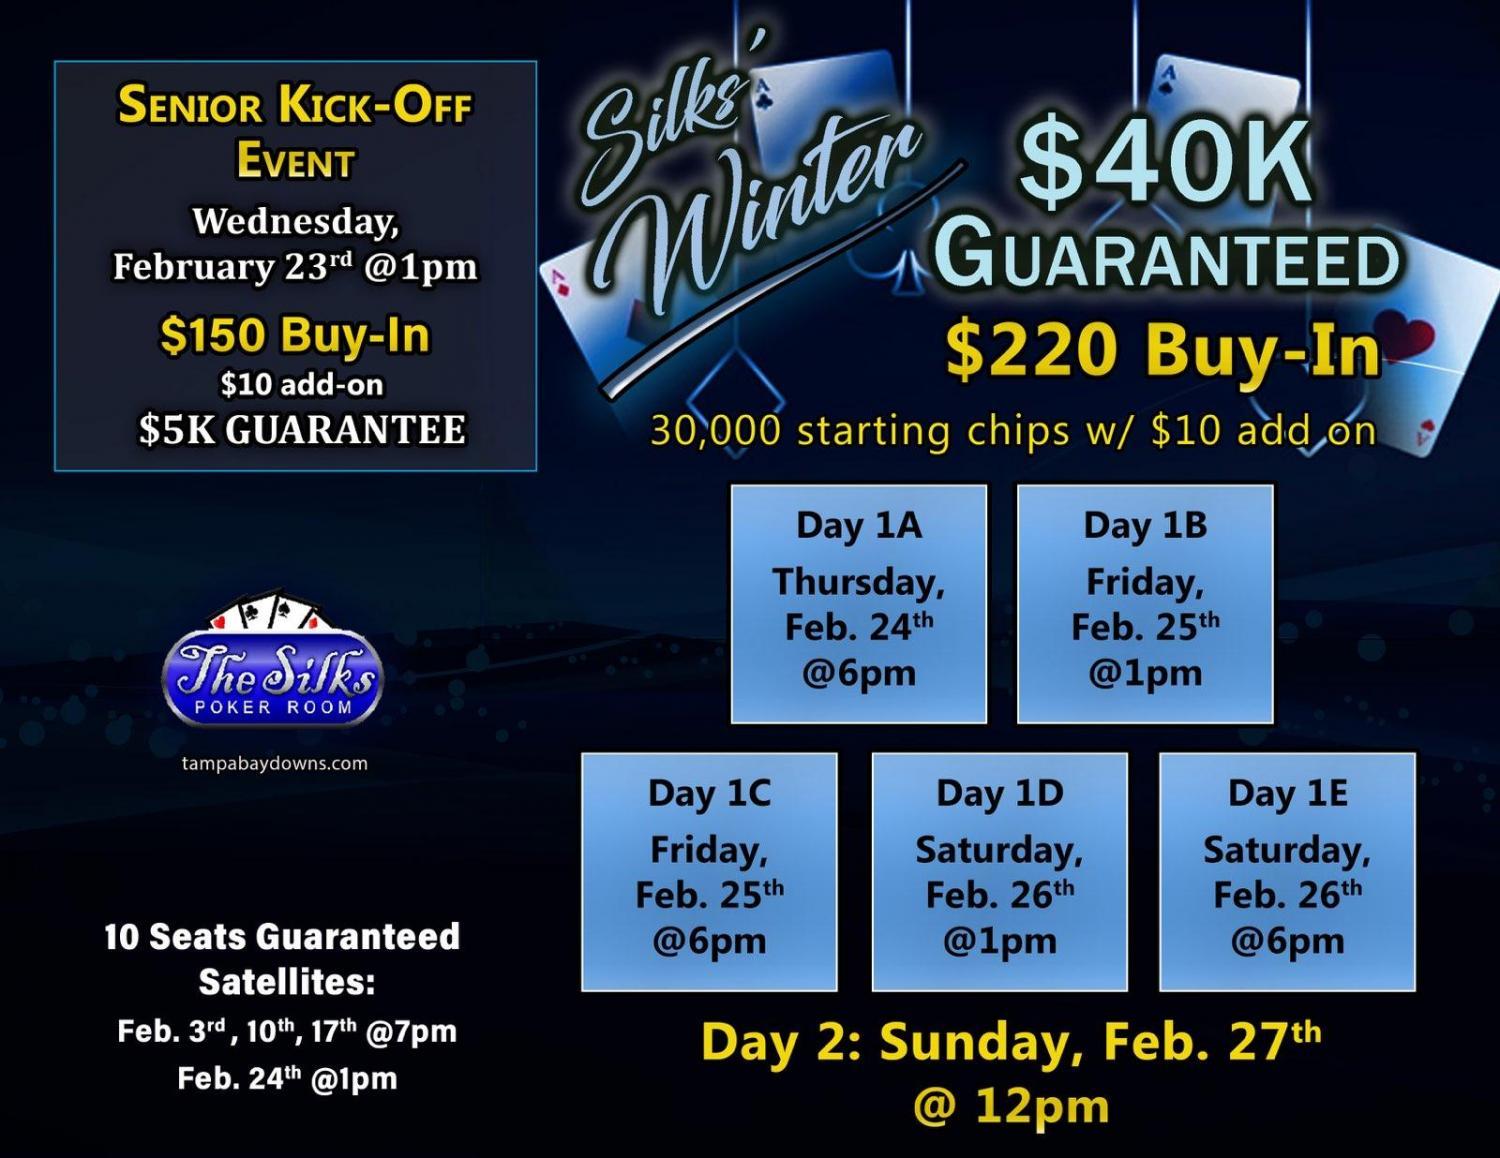 Silks' Winter $40k Guaranteed Poker Tournament